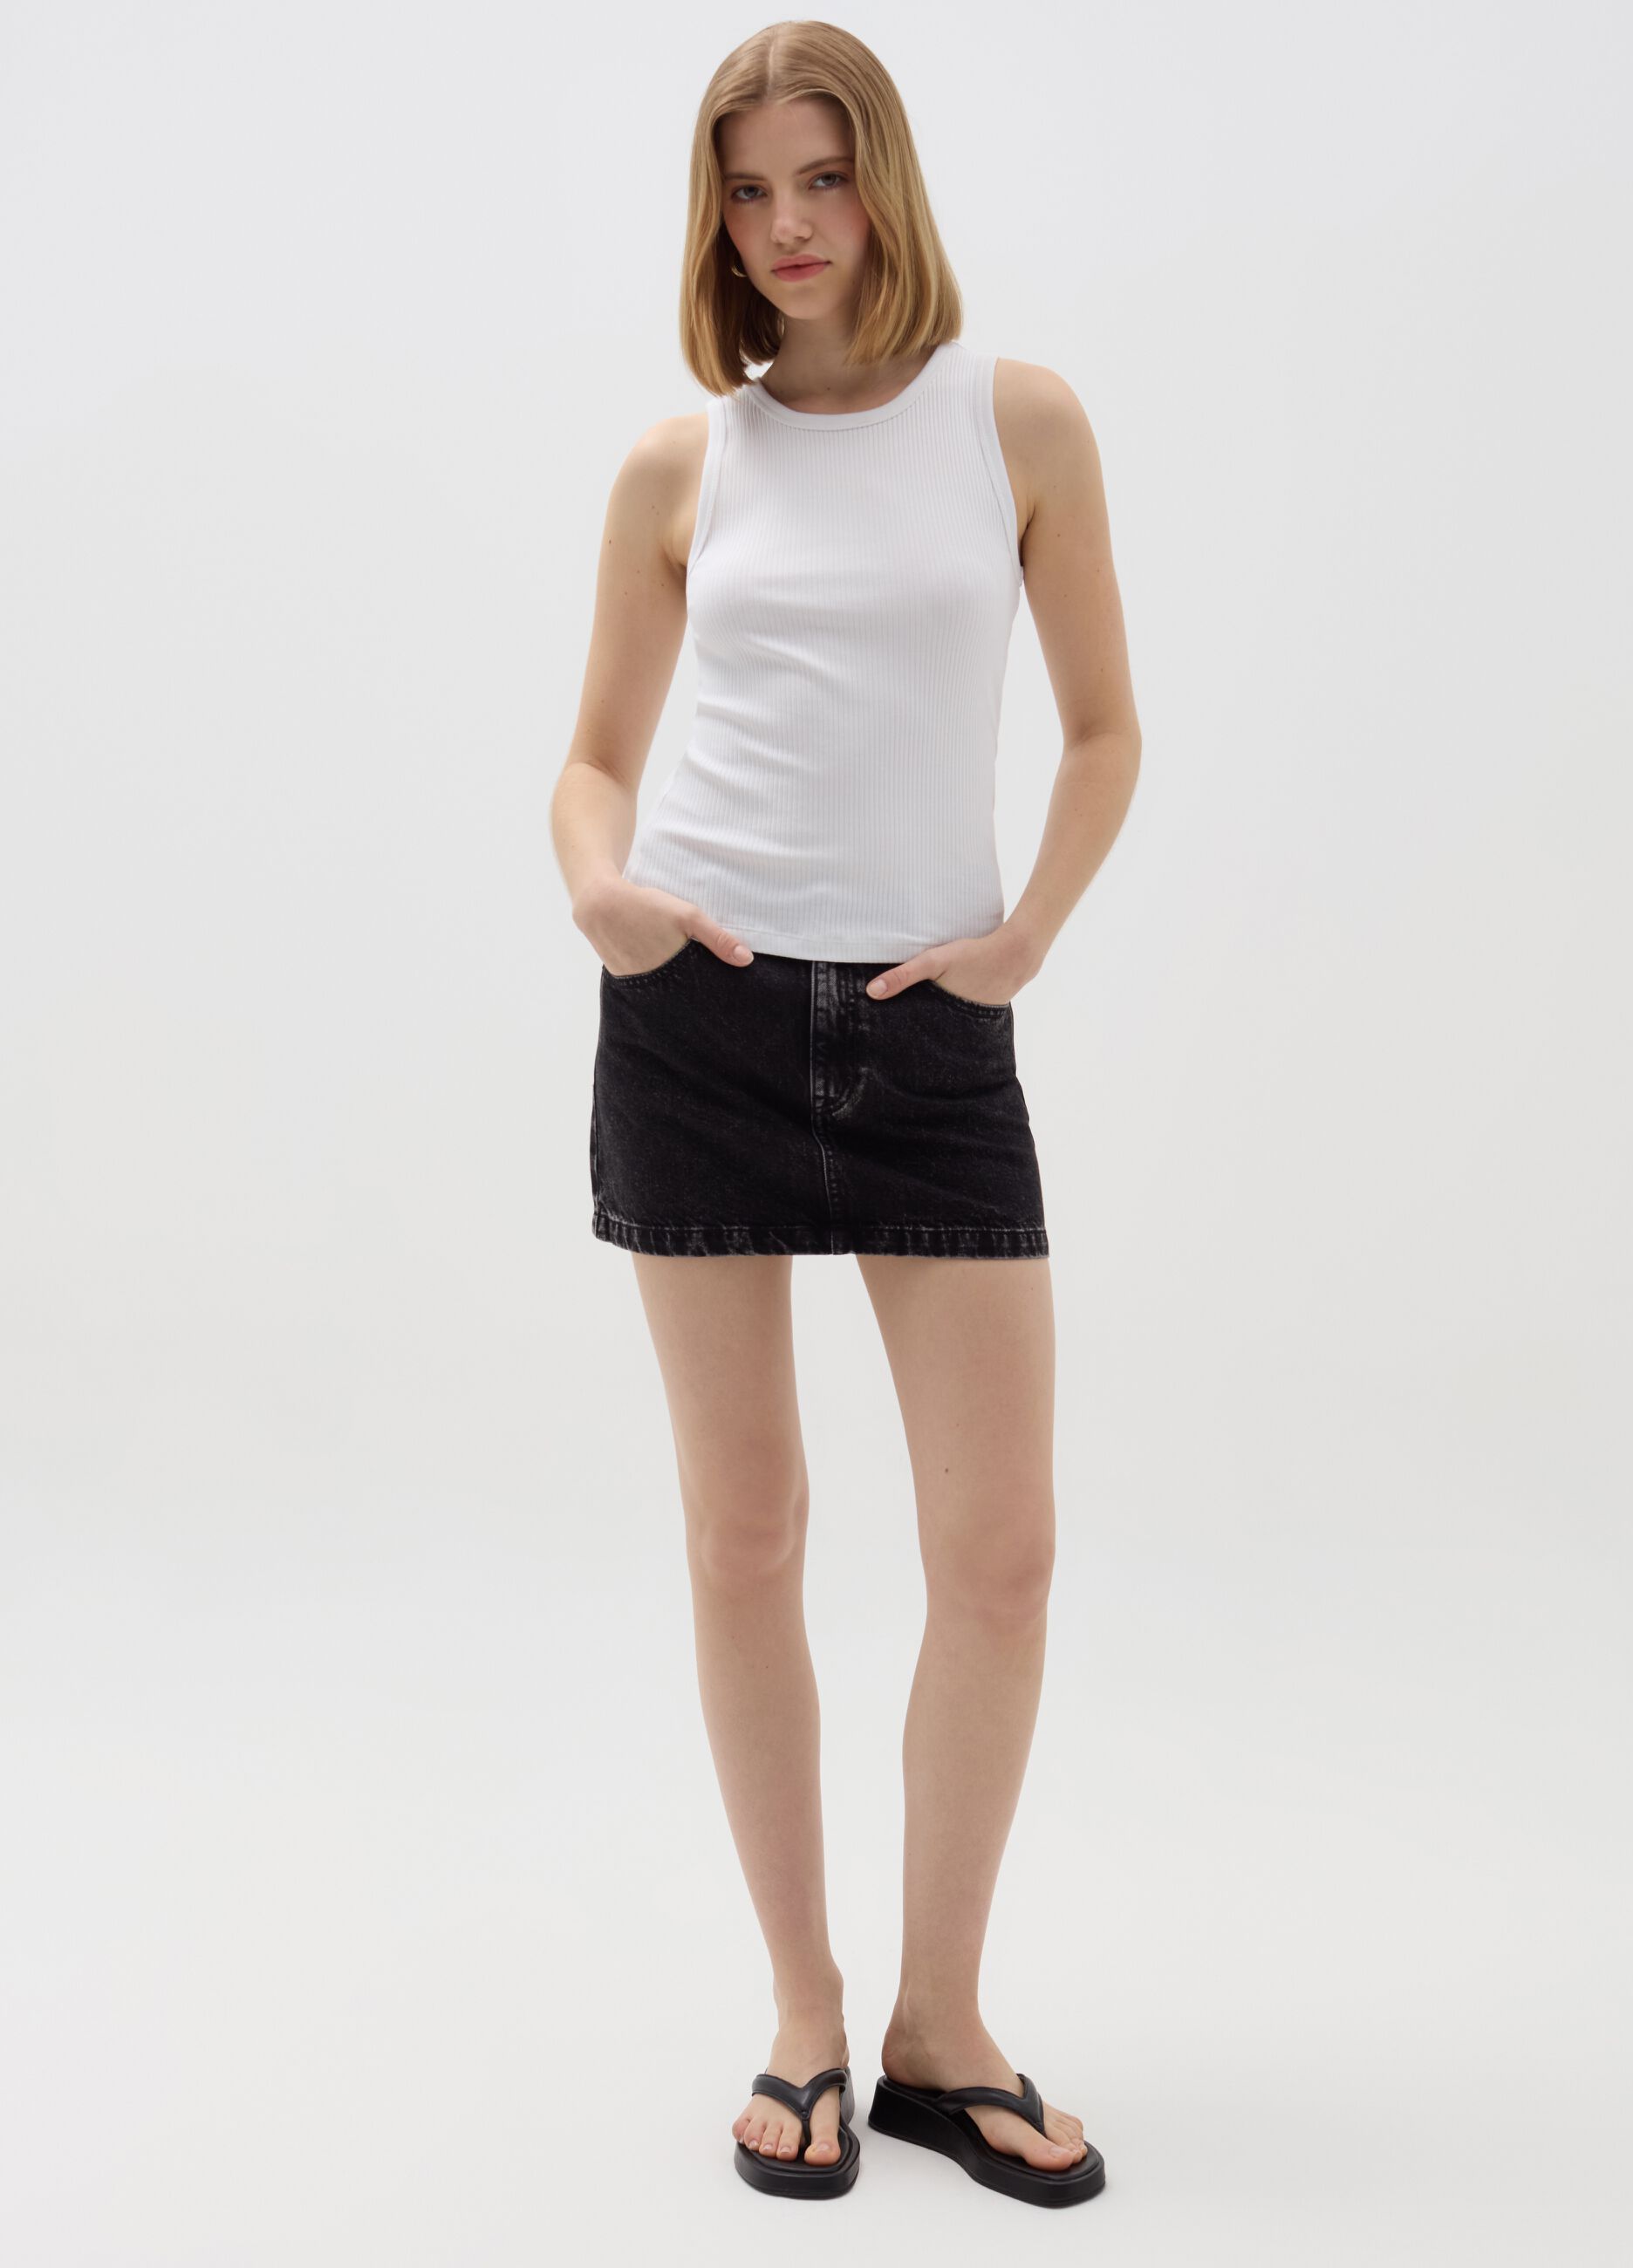 Denim miniskirt with five pockets